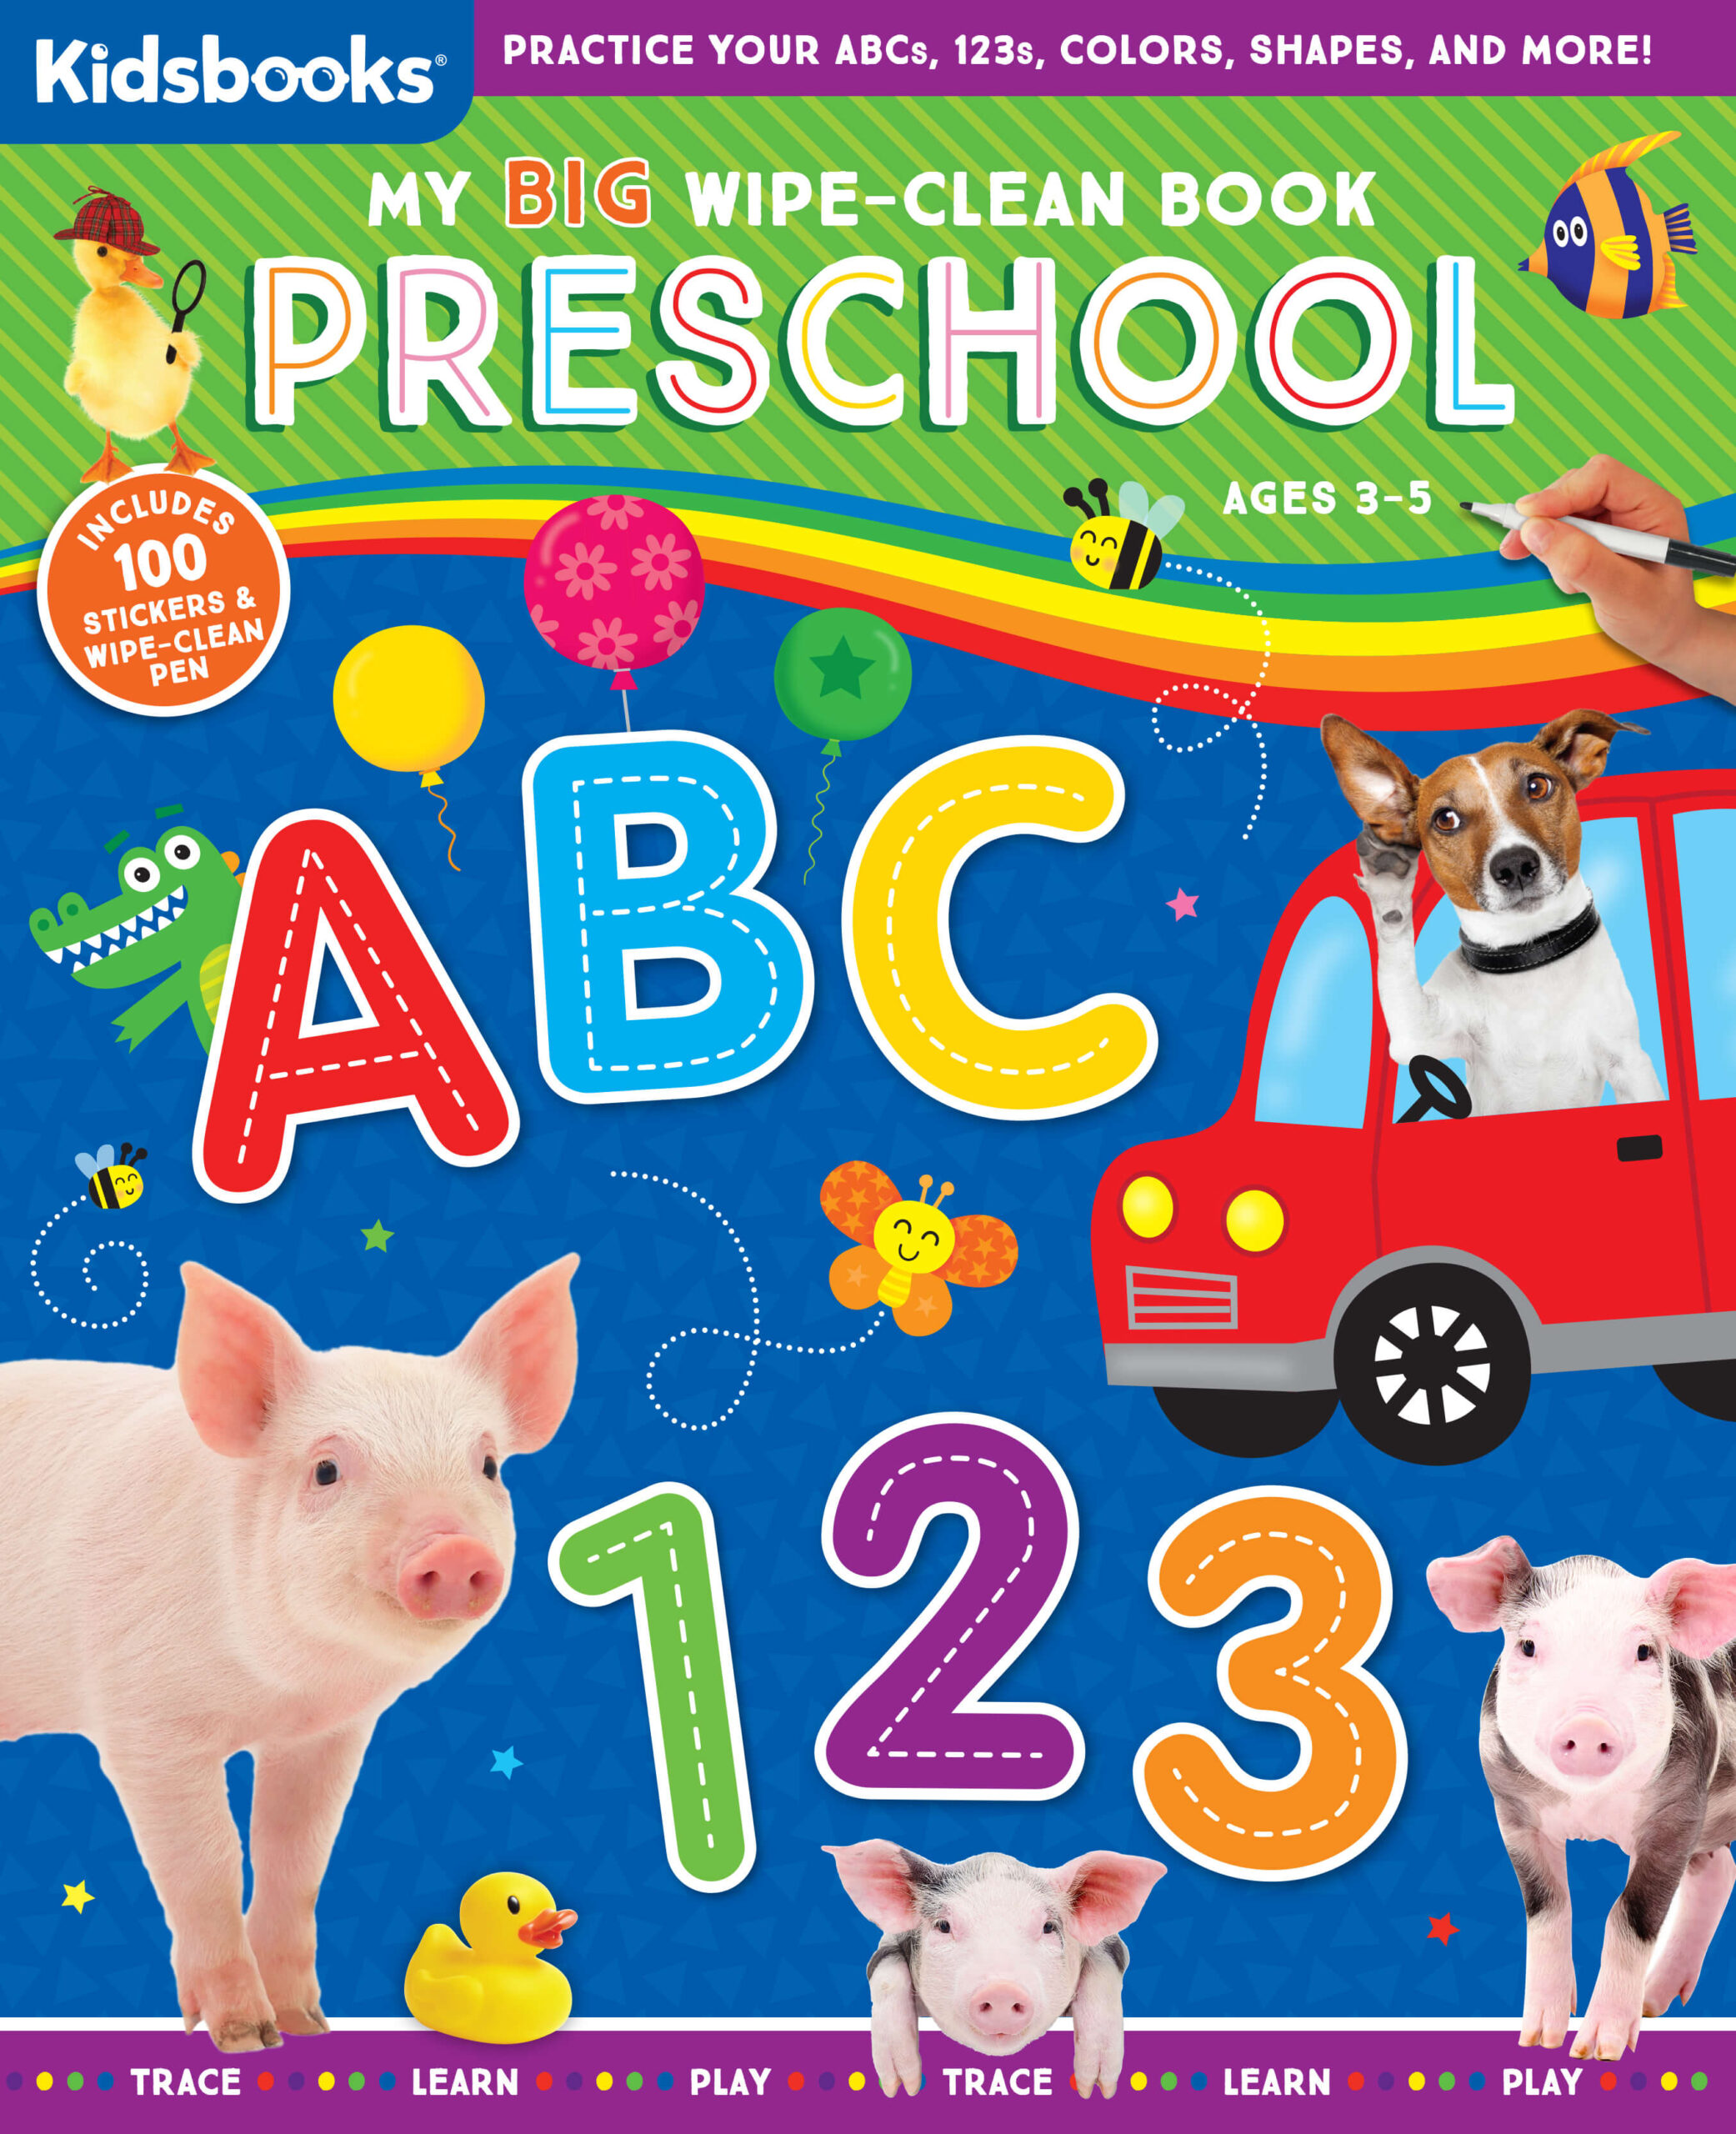 My Big Wipe-Clean Book: Preschool